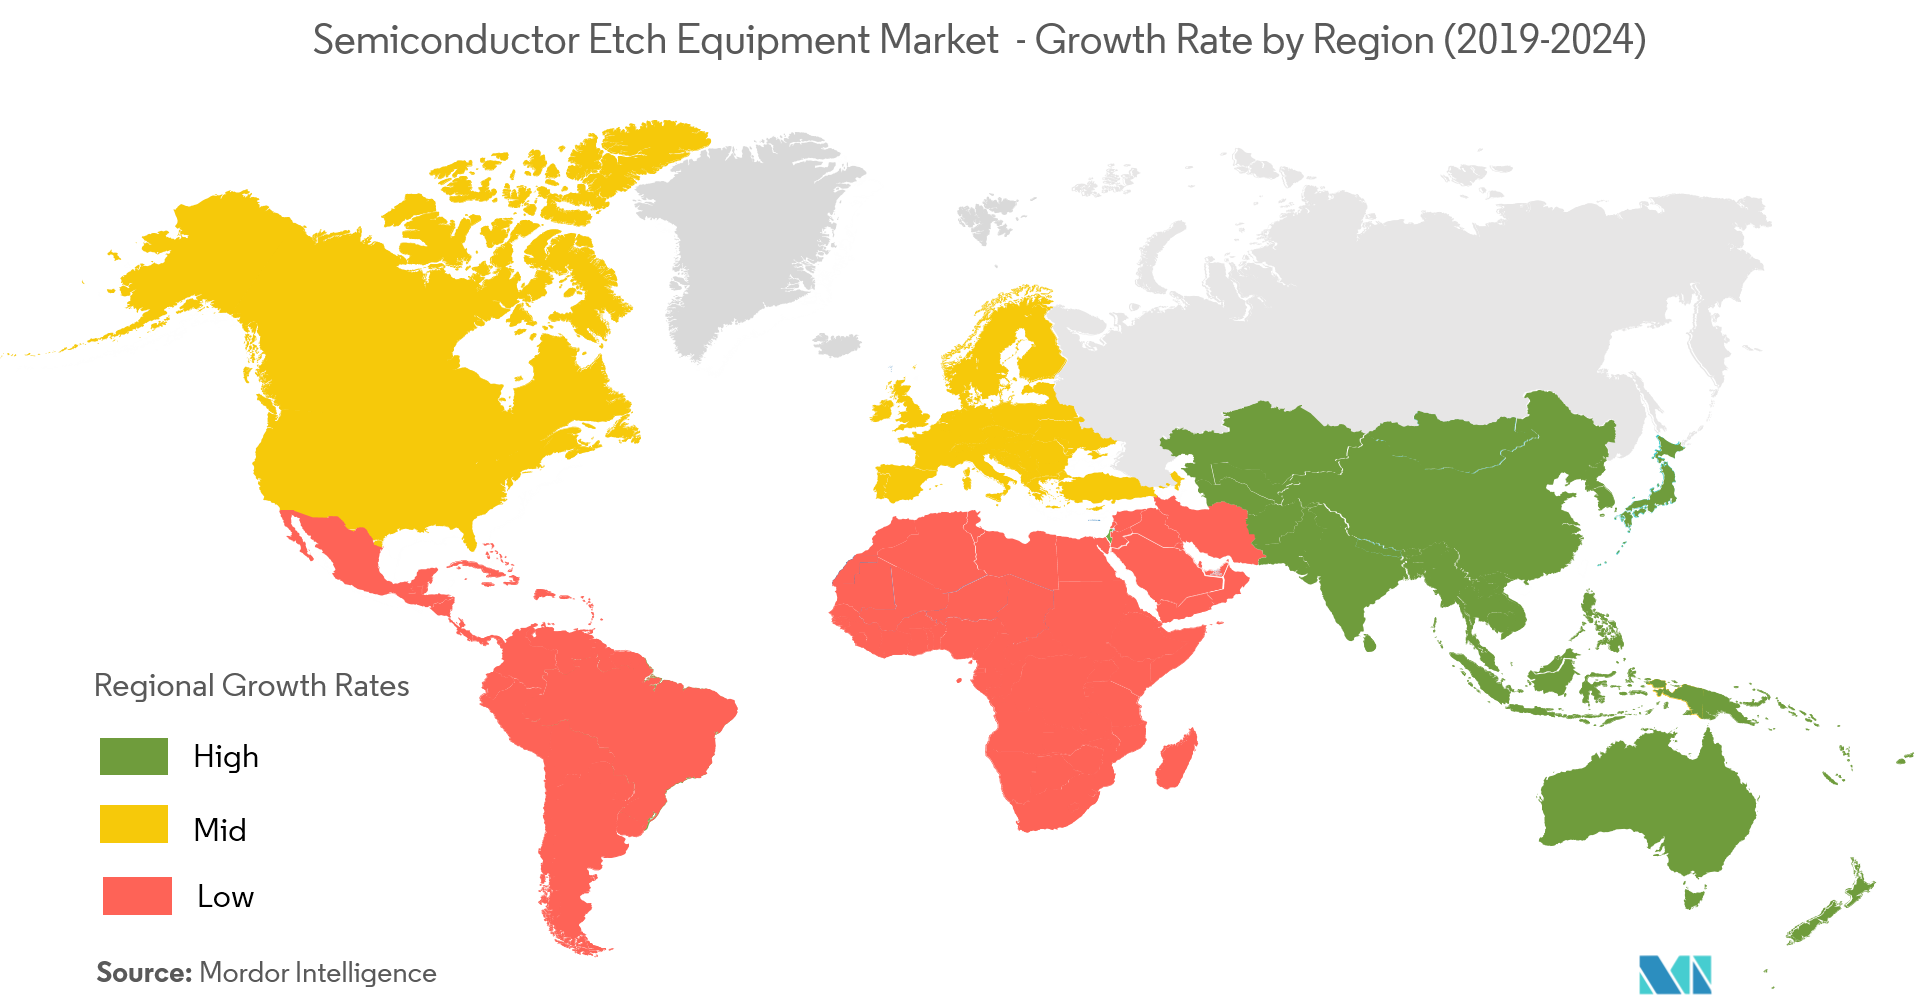 Regional Growth_Semiconductor Etch Equipment Market